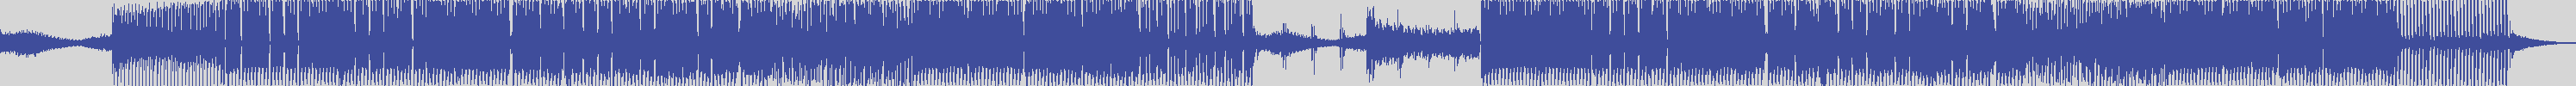 vitti_records [VIT010] El Belin - Eva V [Original Mix] audio wave form